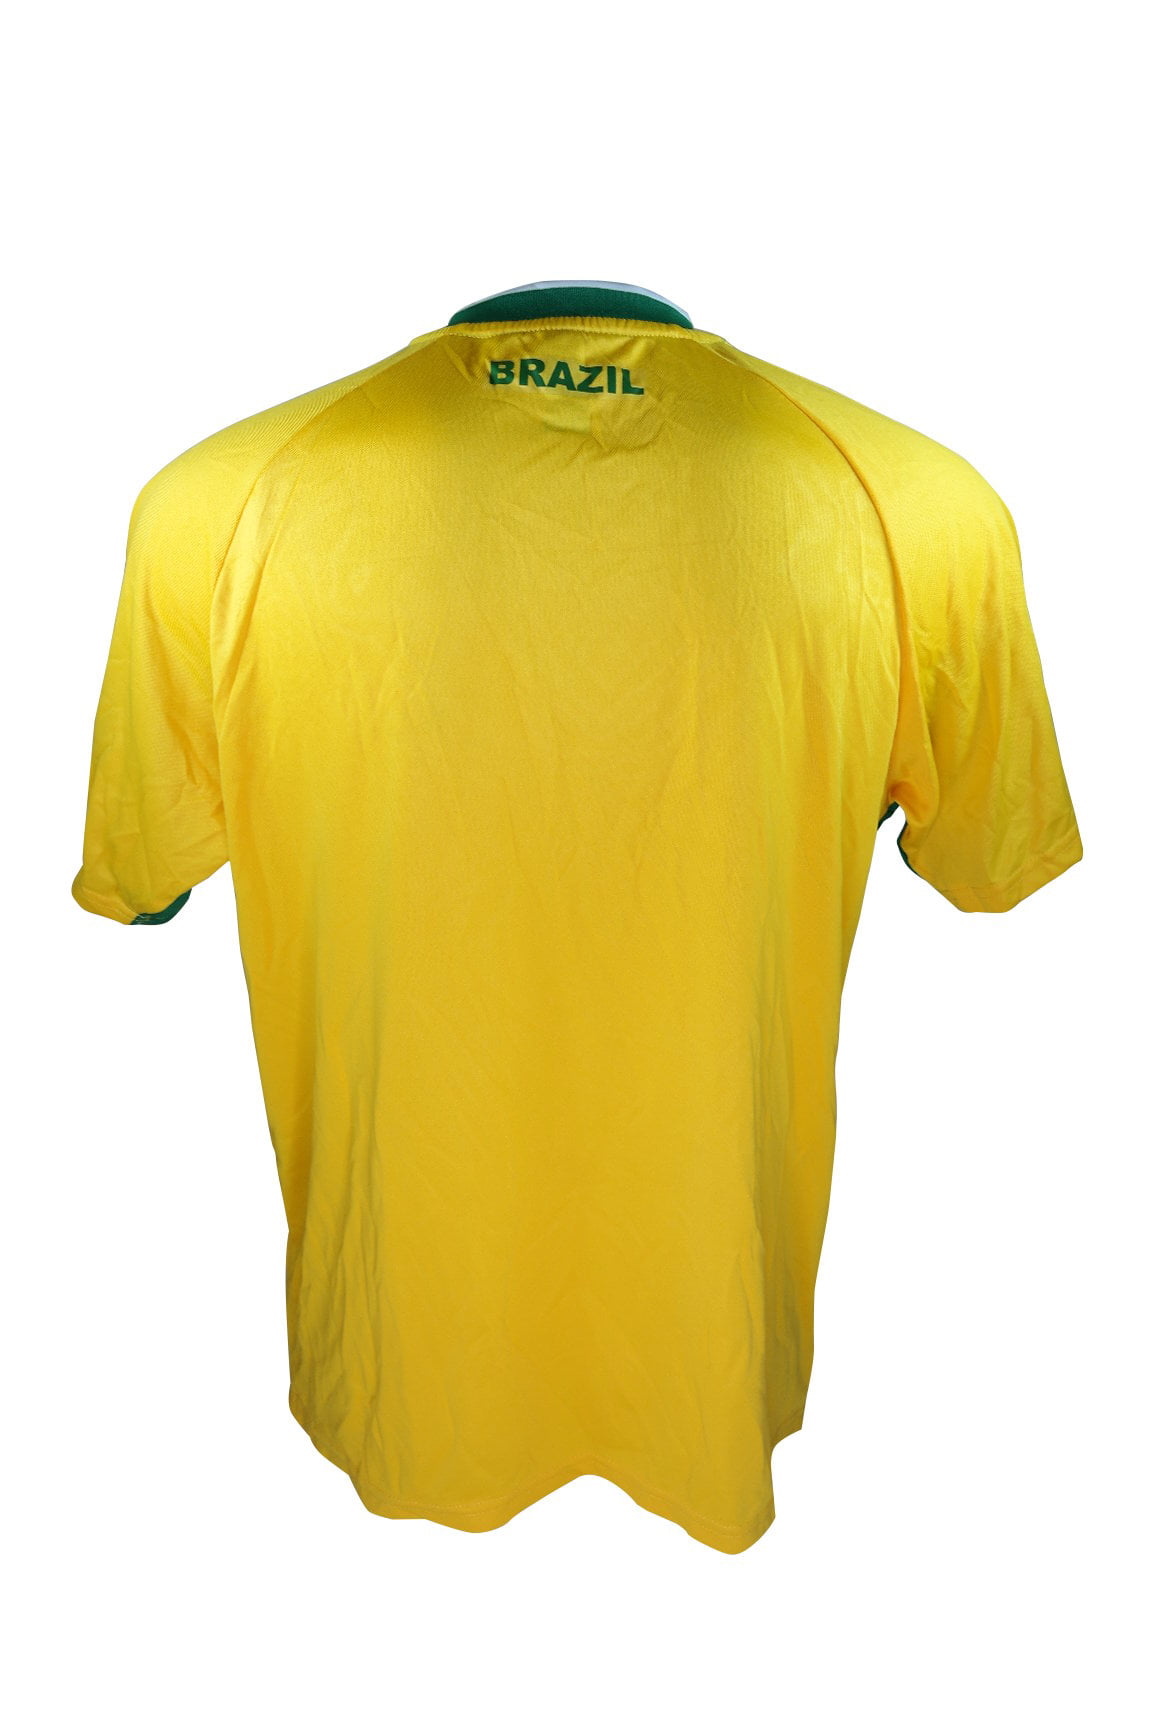 Rhinoxgroup Men Brazil Soccer Poly Shirt Jersey -01 Medium